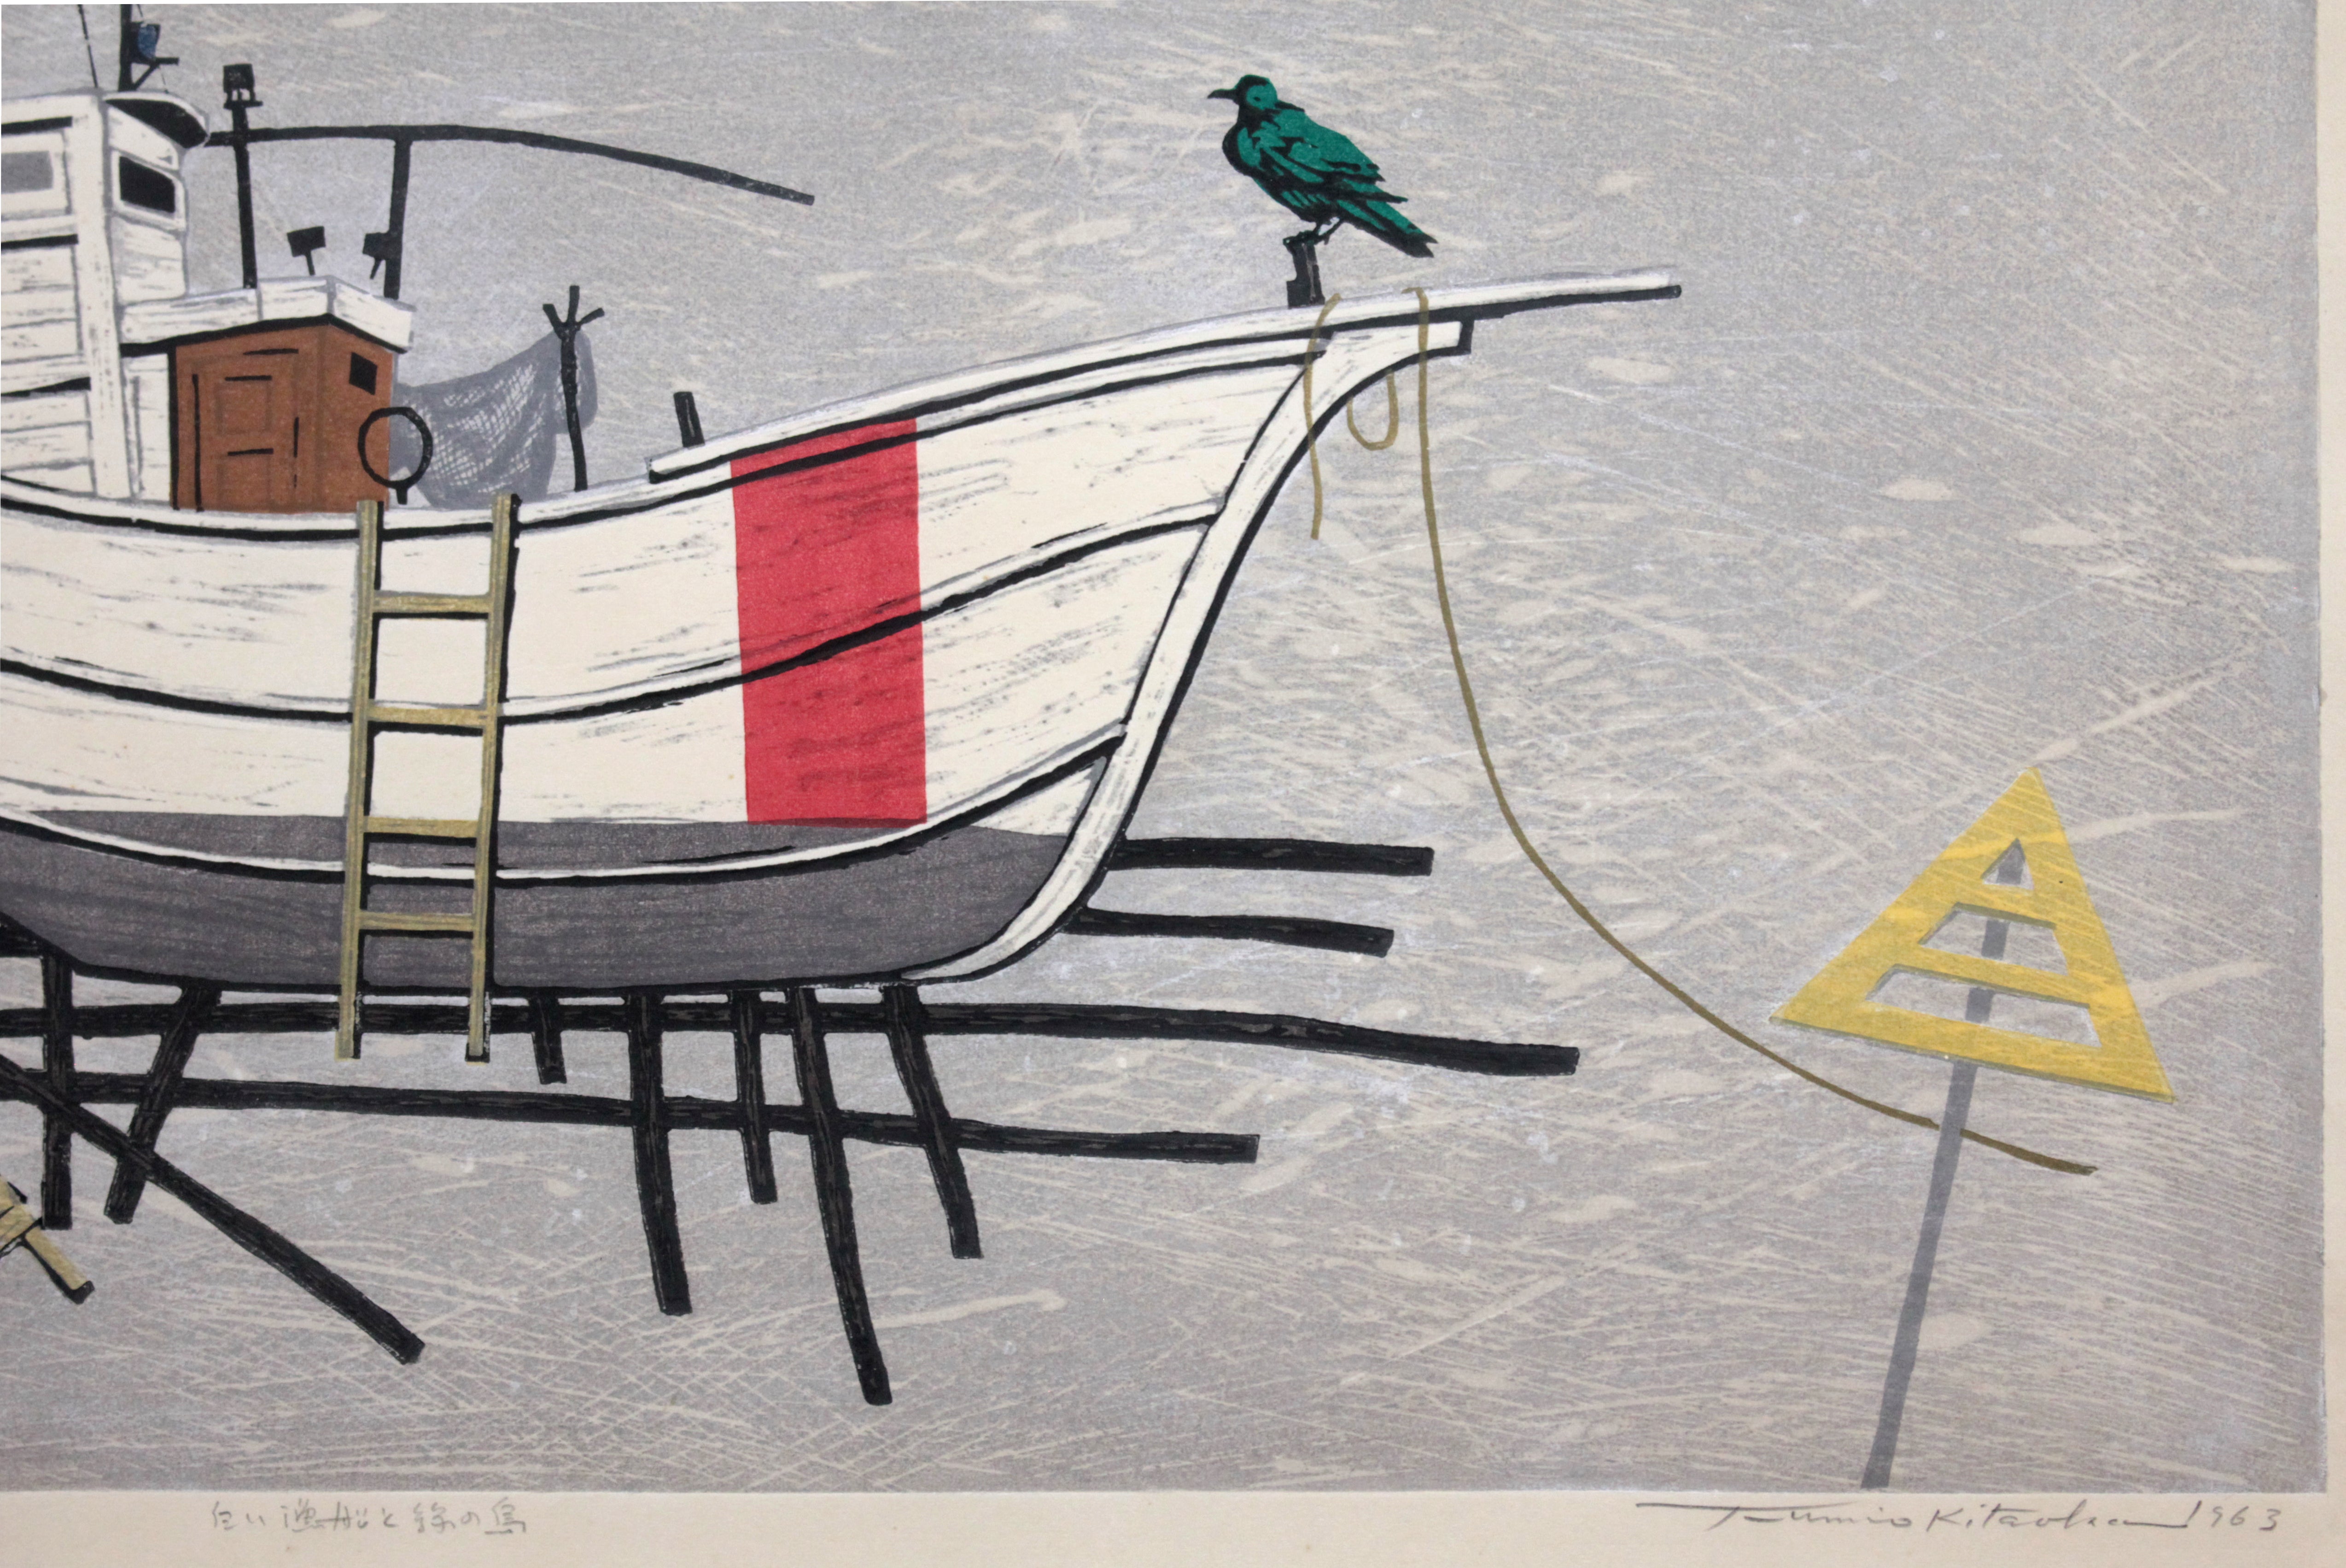 北岡文雄 『白い漁船と青い鳥』 木版画 - 北海道画廊